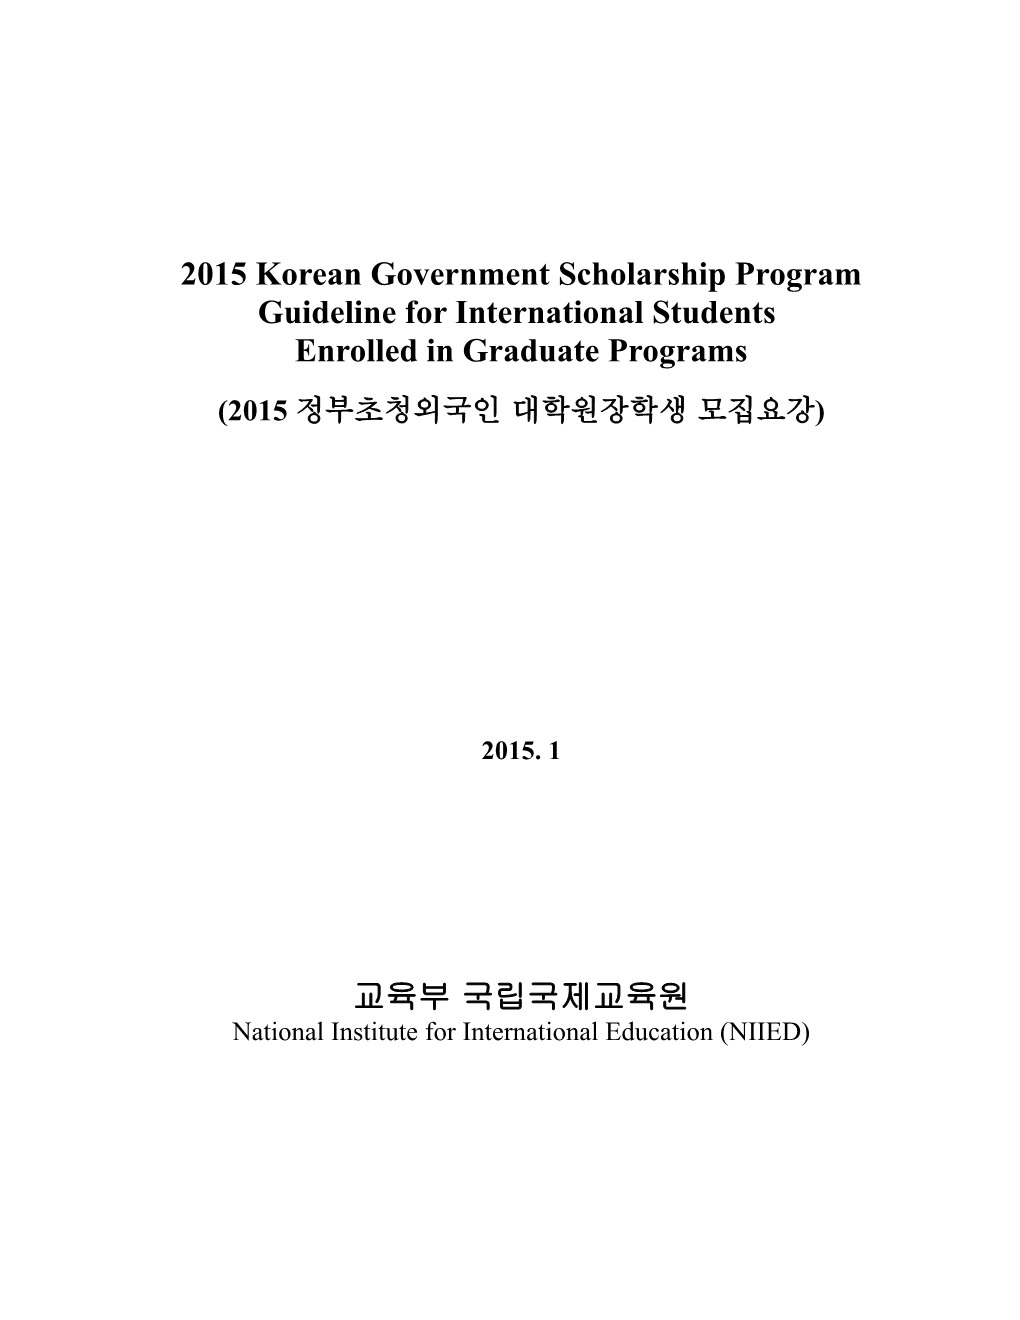 2015 Korean Government Scholarship Program s1